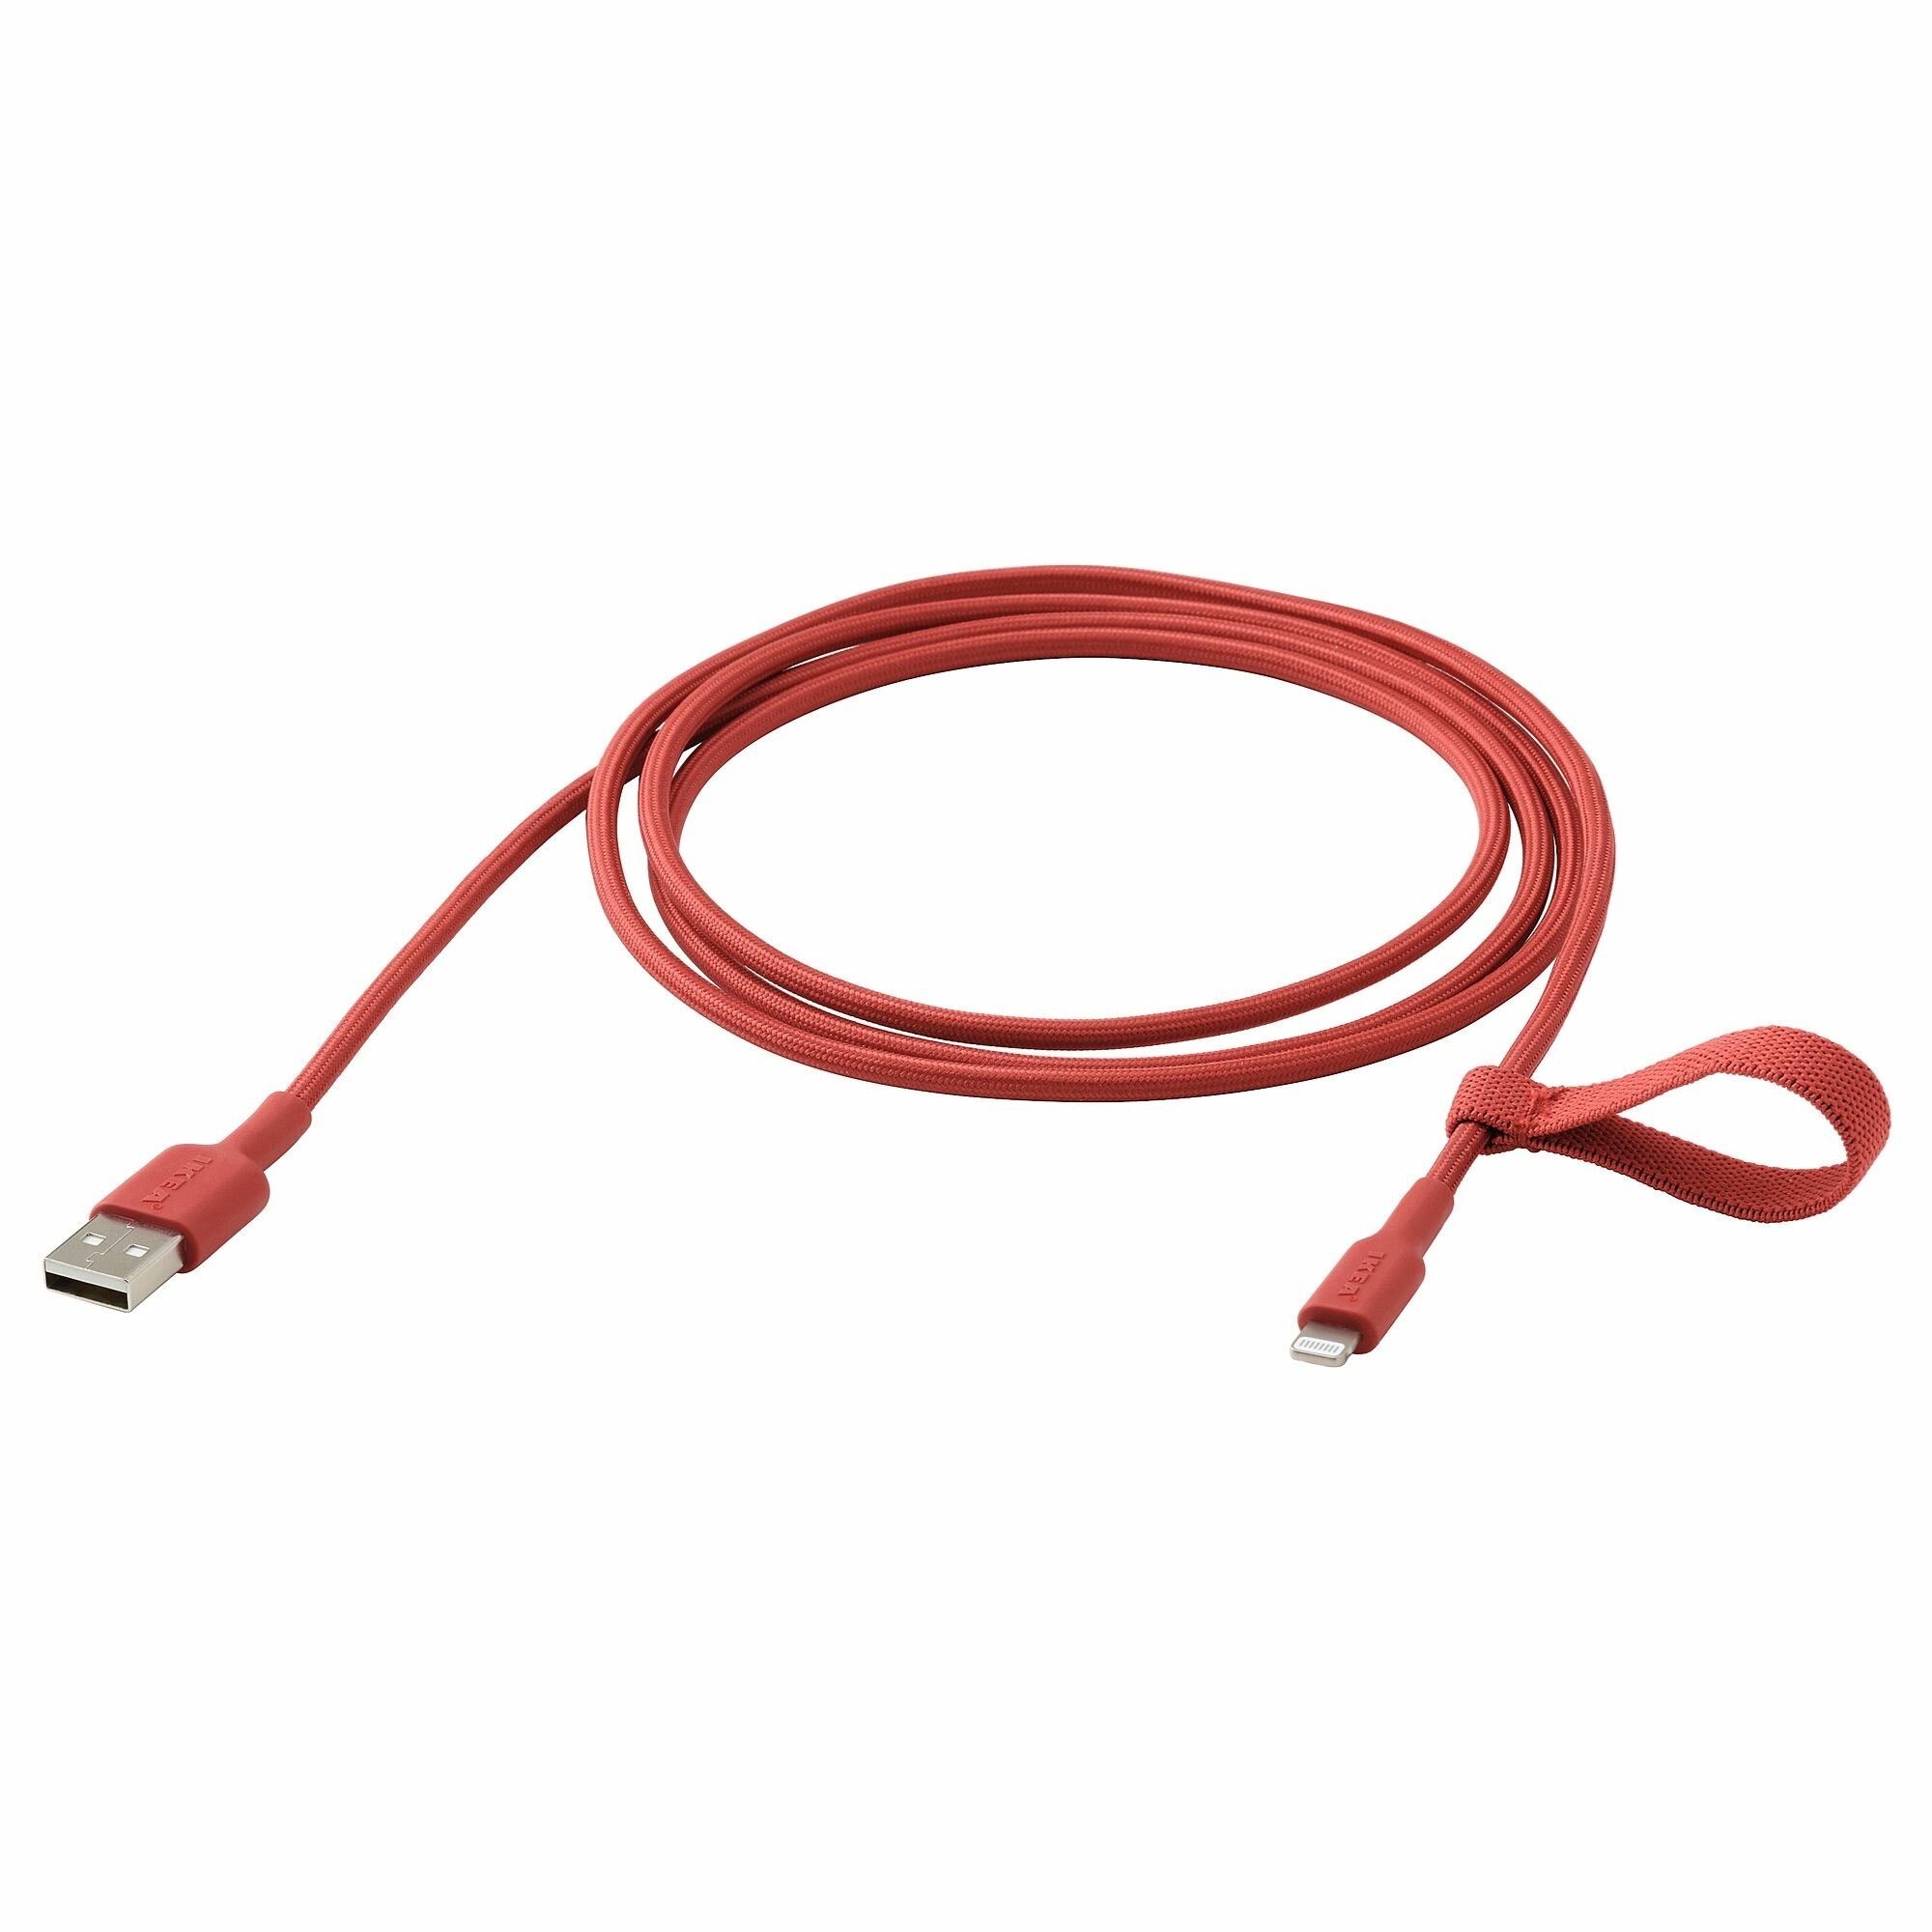 Икея / IKEA LILLHULT LILLHULT Кабель Lightning-USB красный 15 м